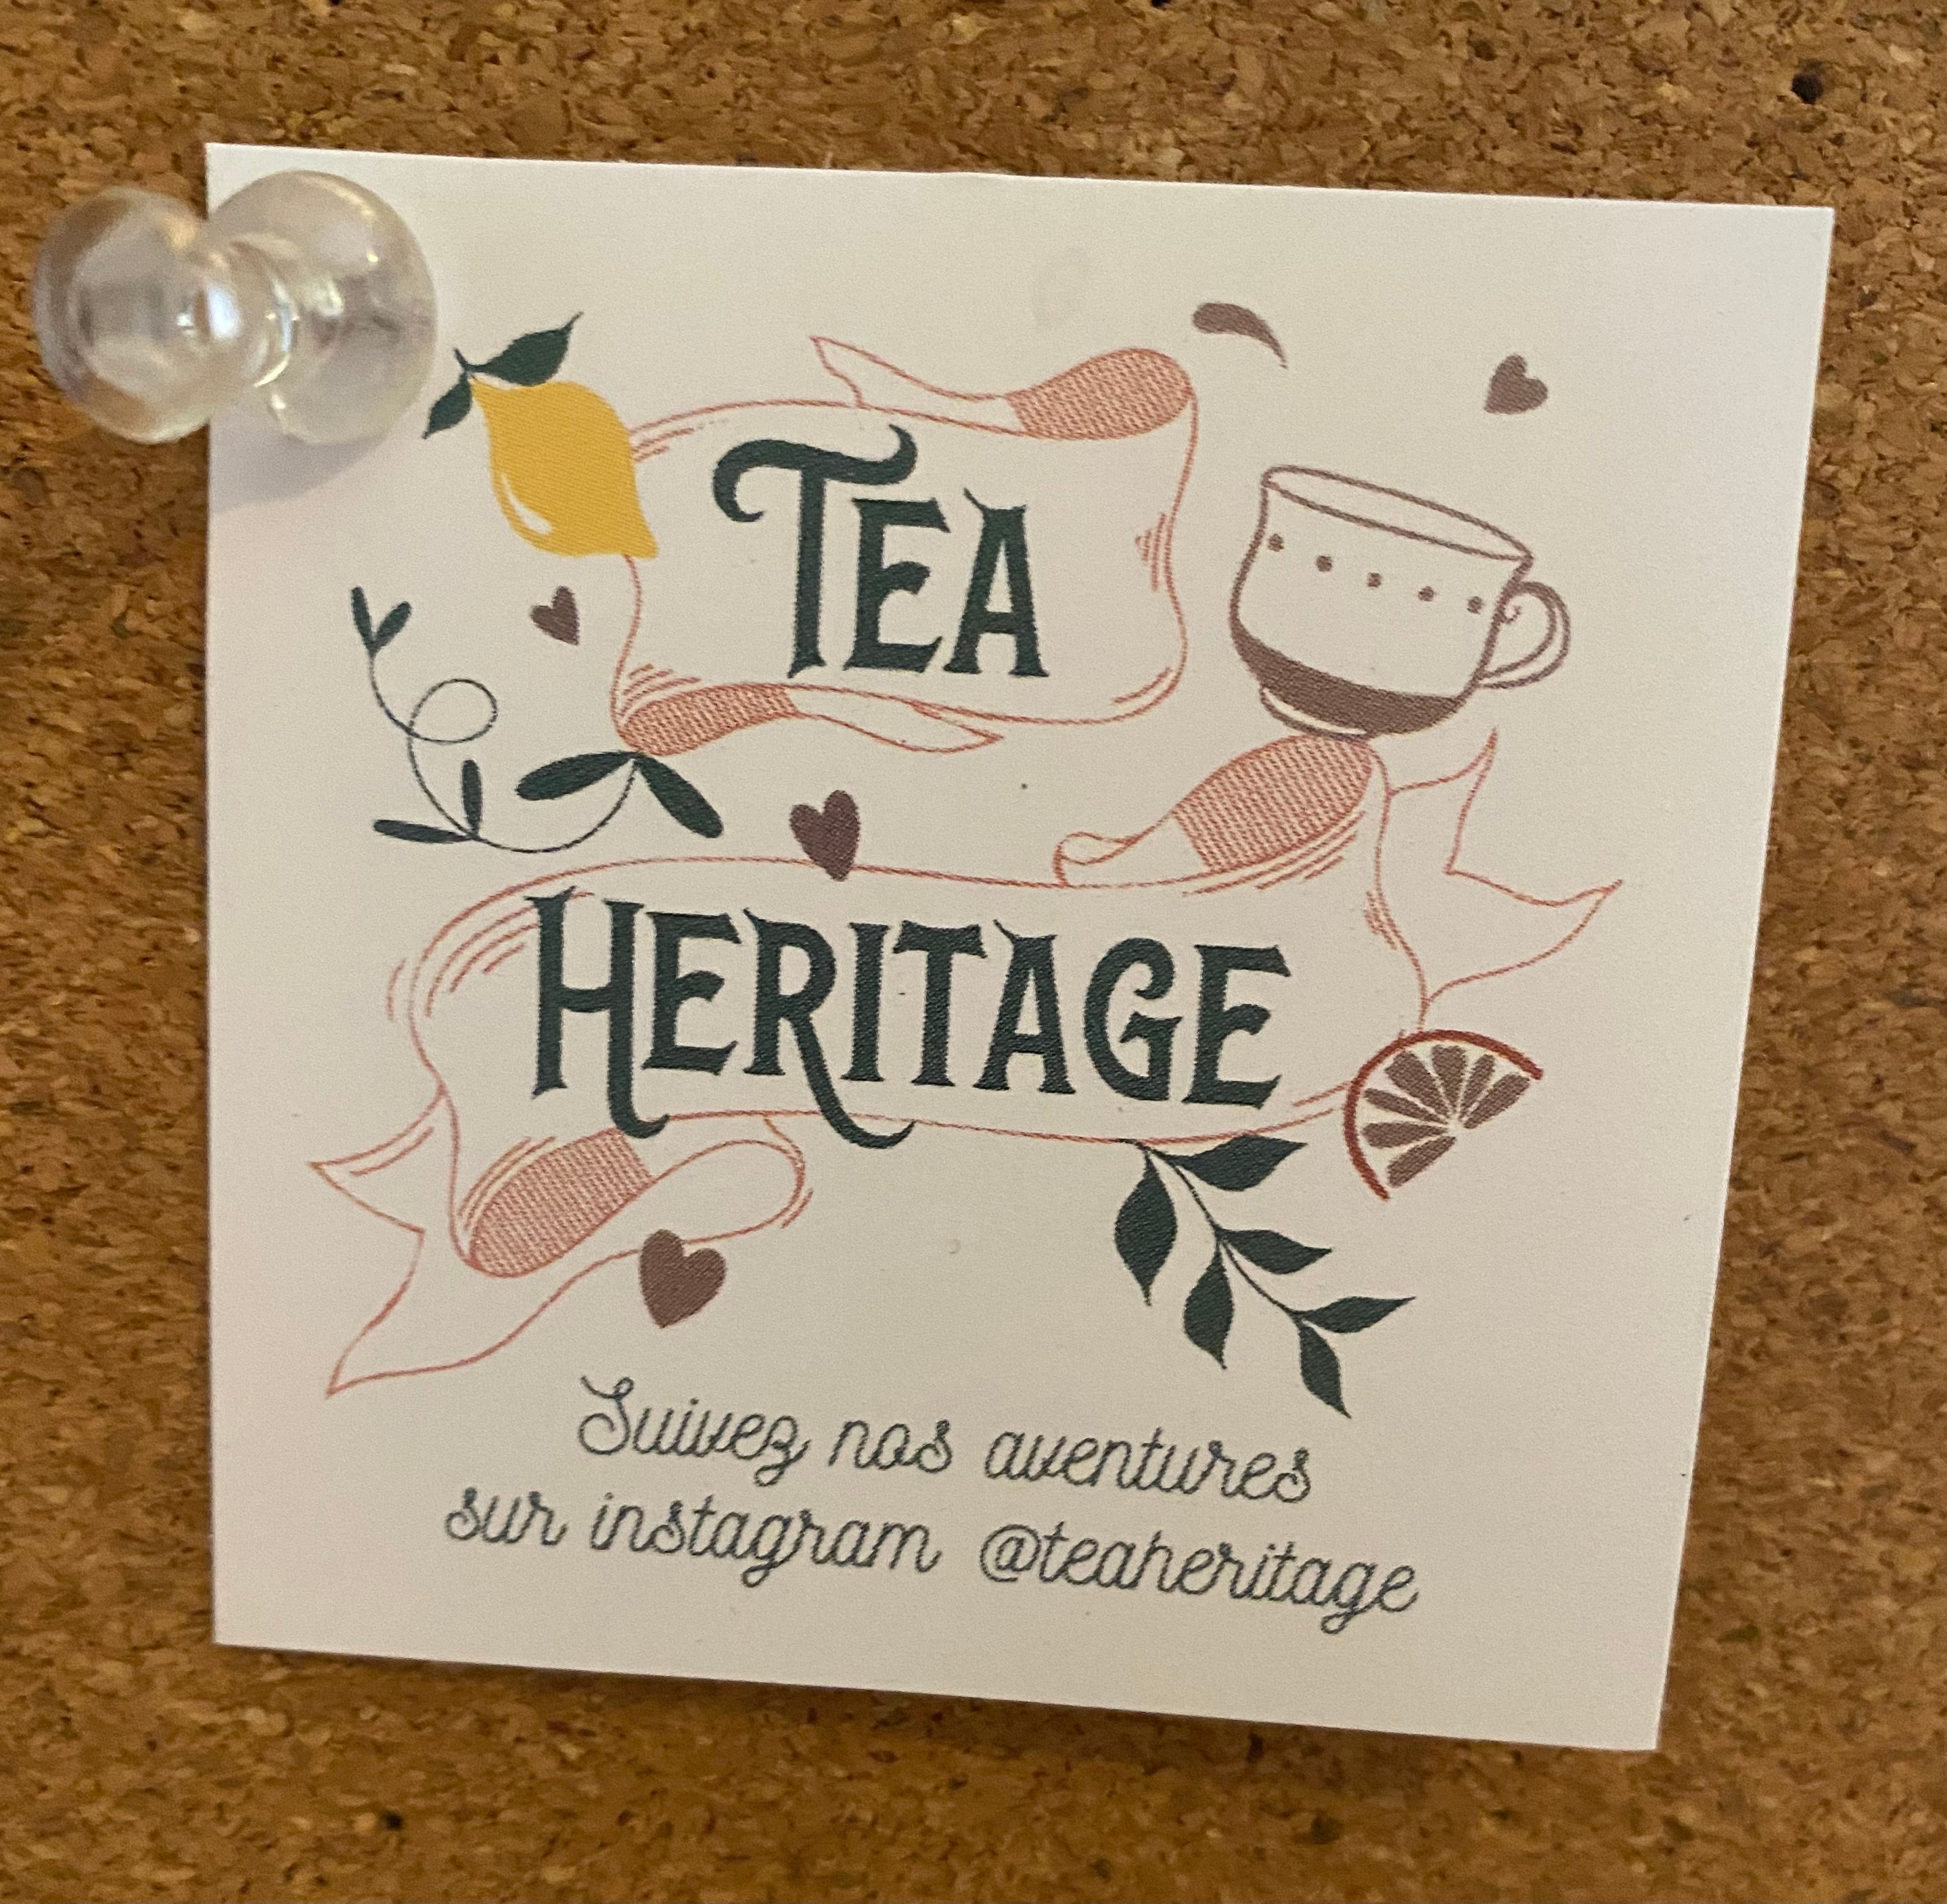 Penguin Tea Bags by Tea Heritage